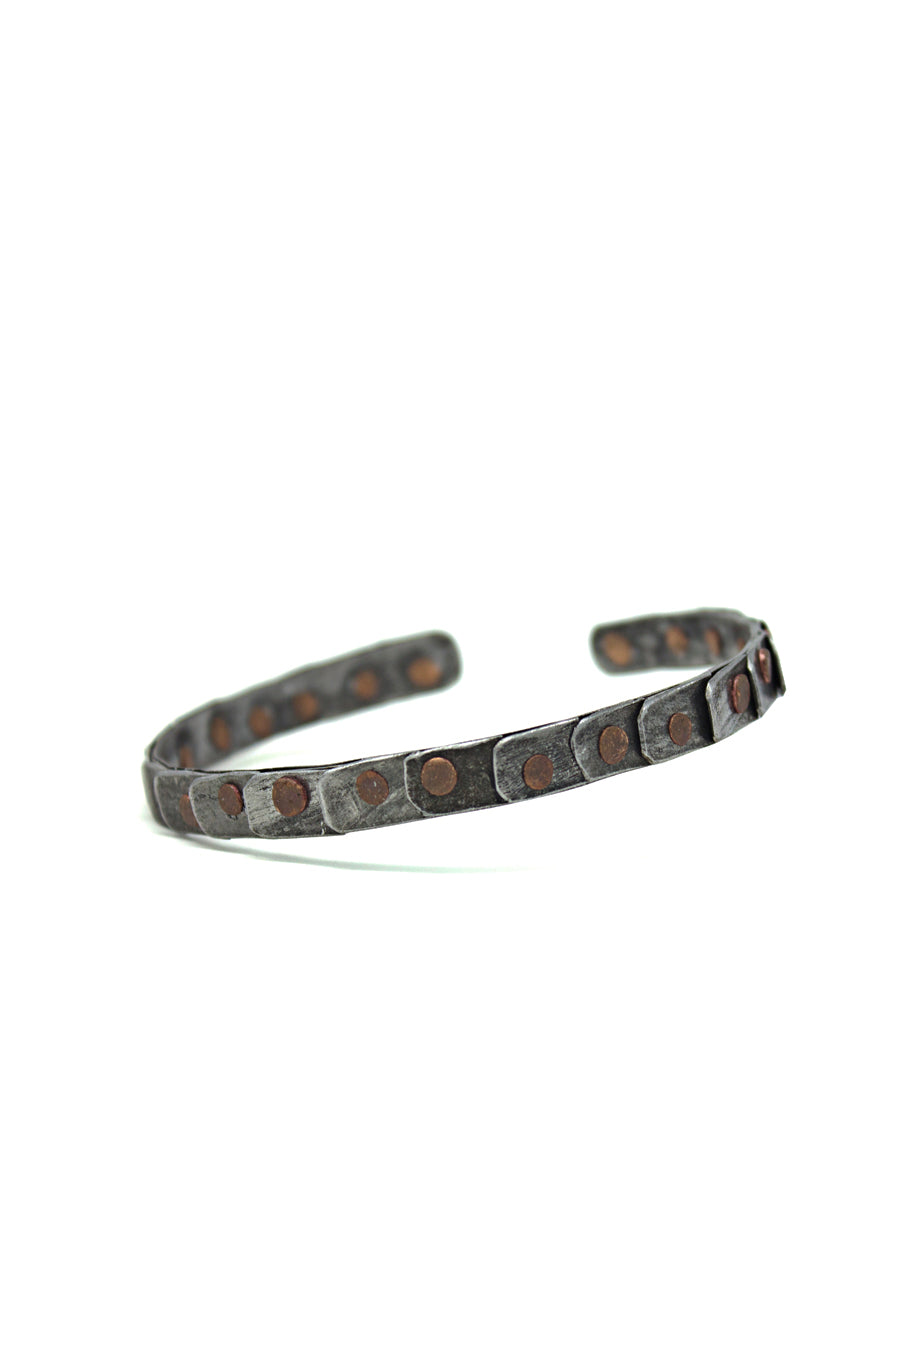 Pangolin conservation bracelet in copper